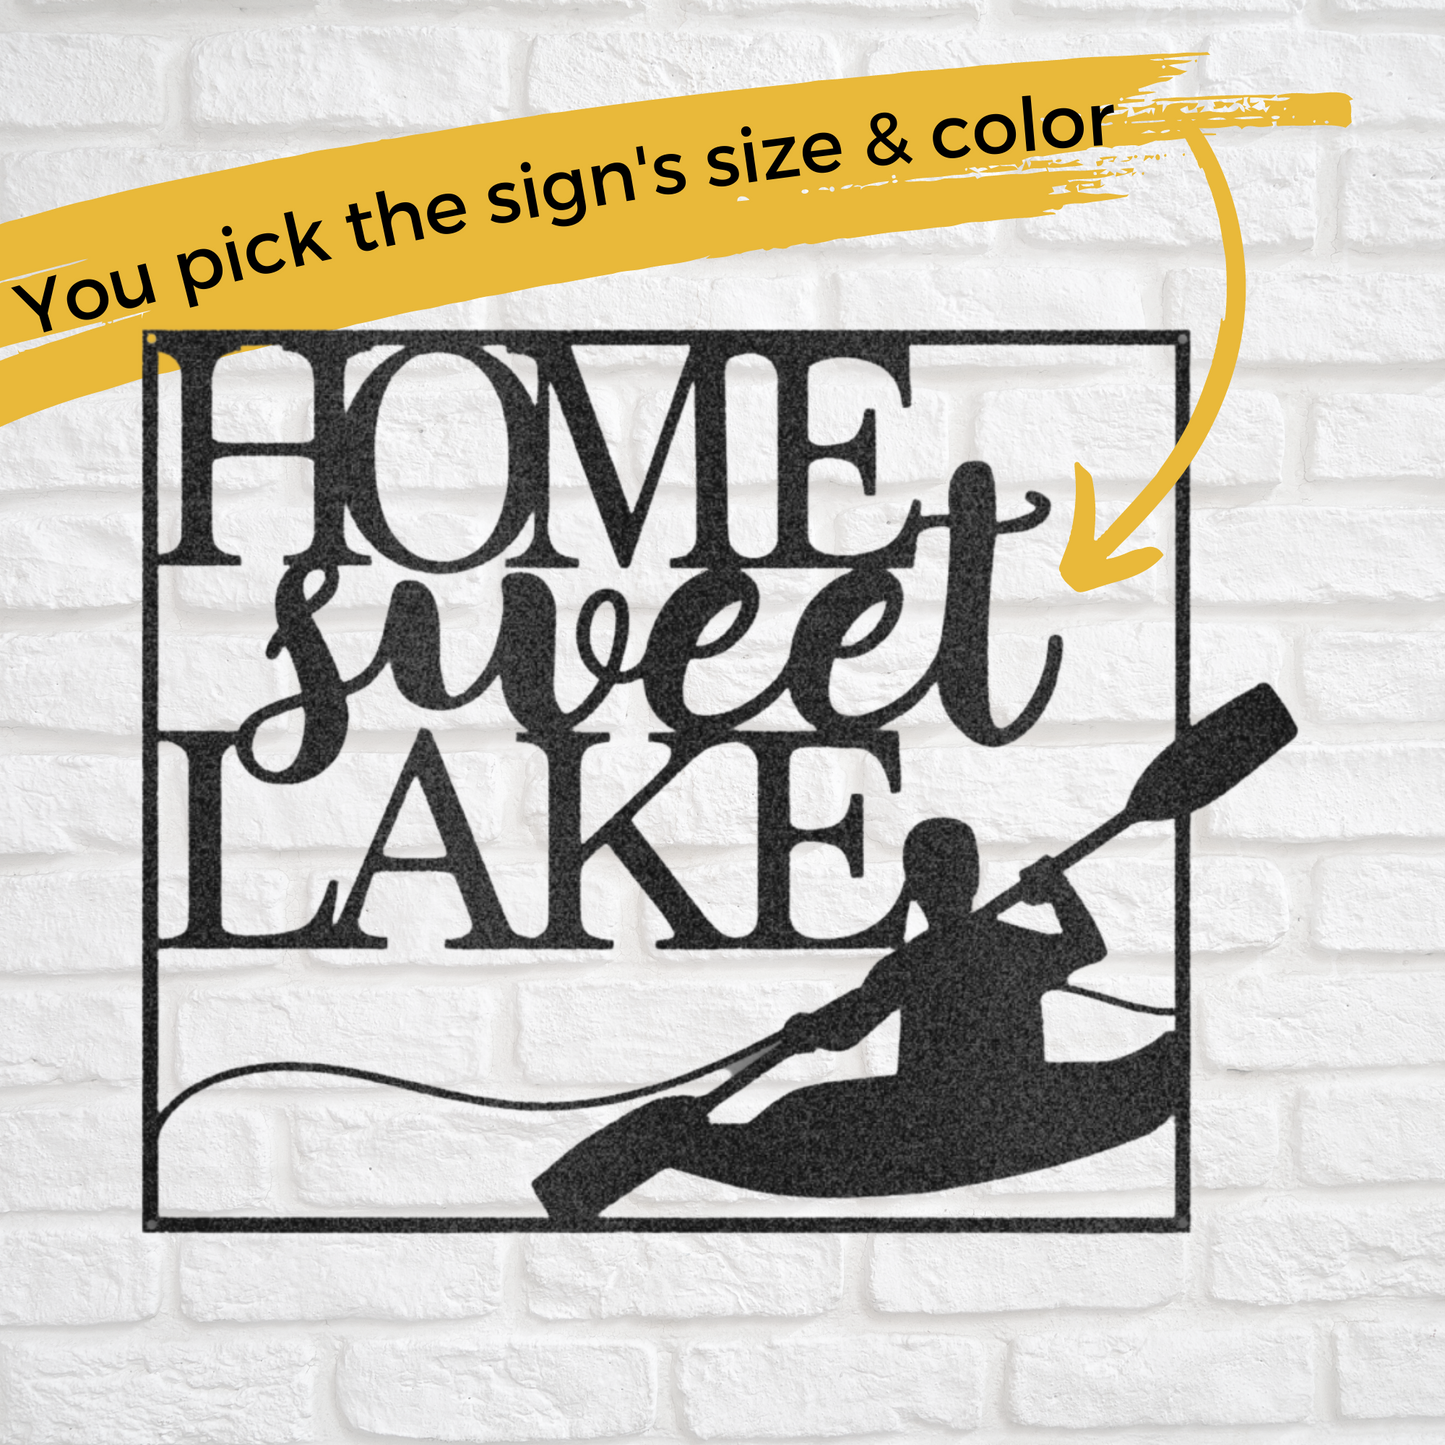 Lake Life Metal Sign, Home Sweet Lake, Kayaking Metal Wall Art, Lodge Decor, Cabin Decor, Lake House Decor